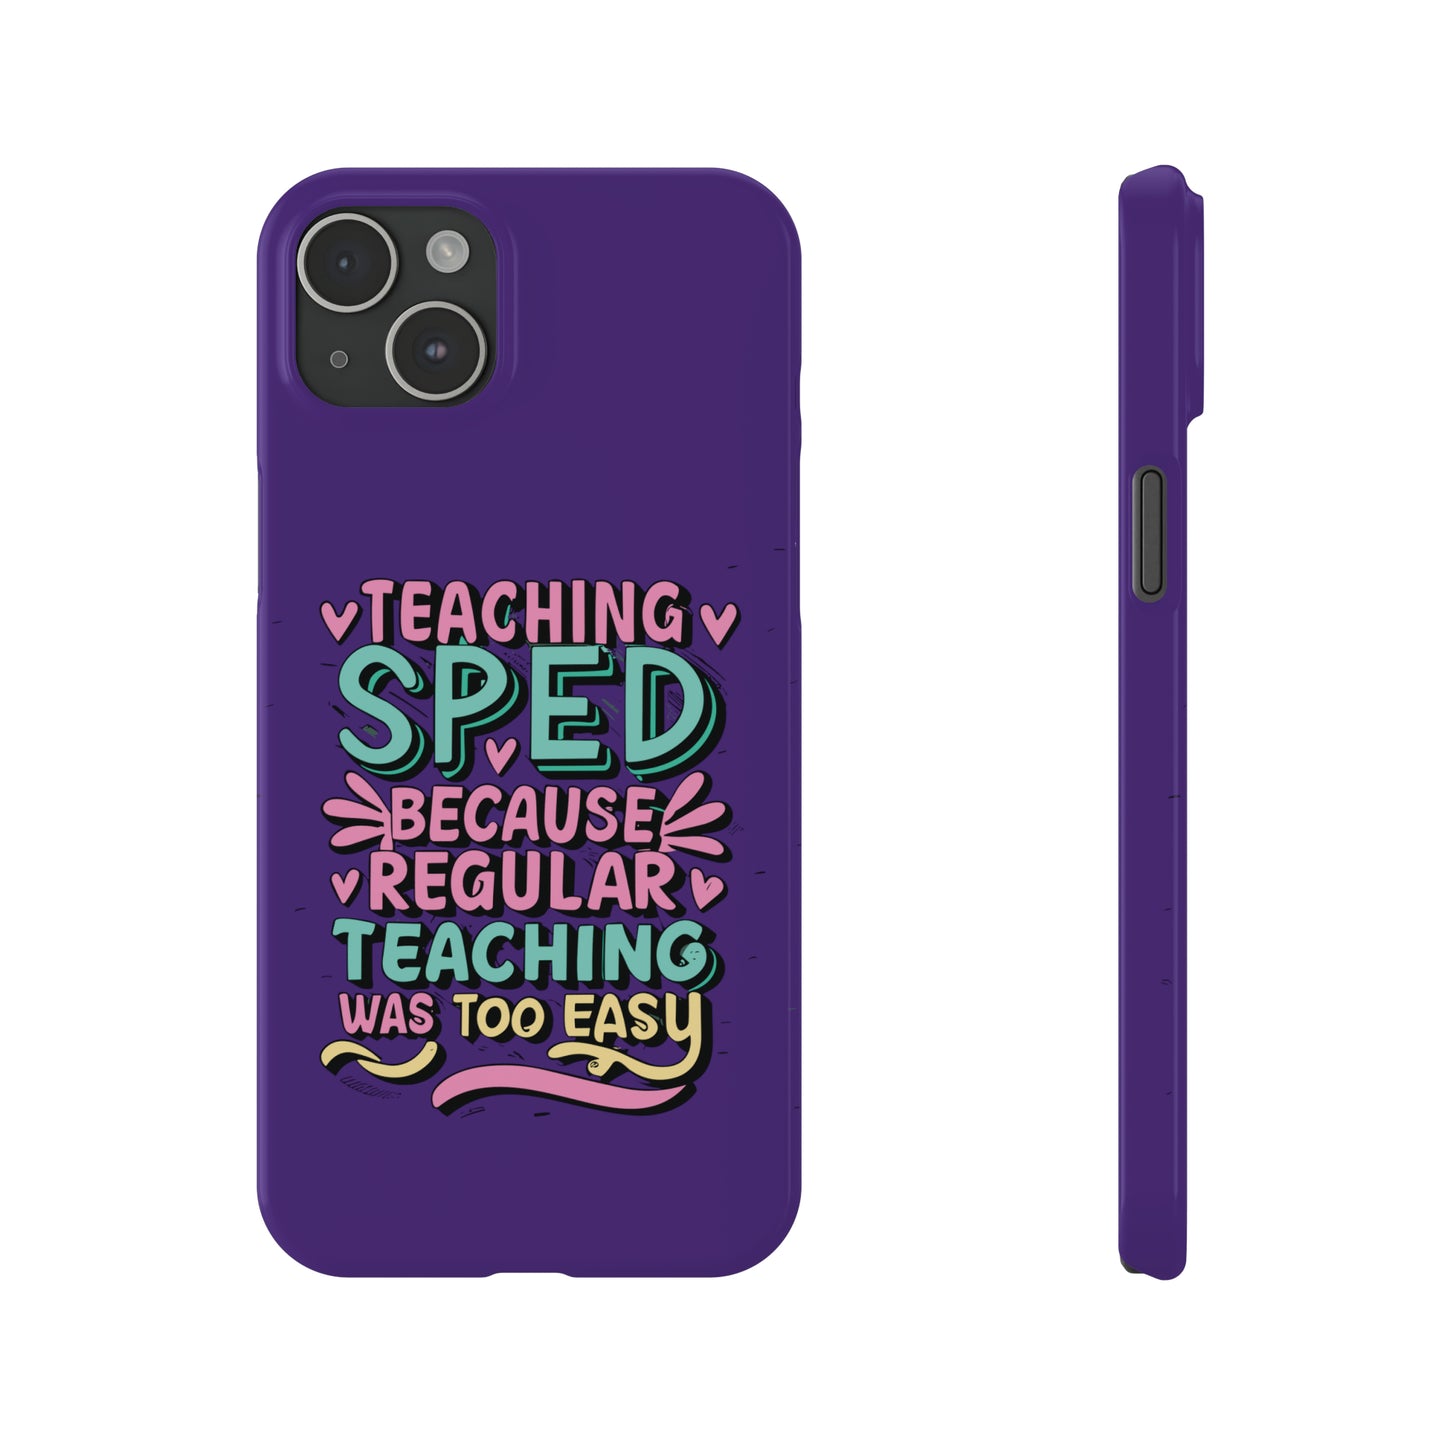 Special Ed Teacher Slim Phone Case - "Teaching SPED Because Regular Teaching Was Too Easy"